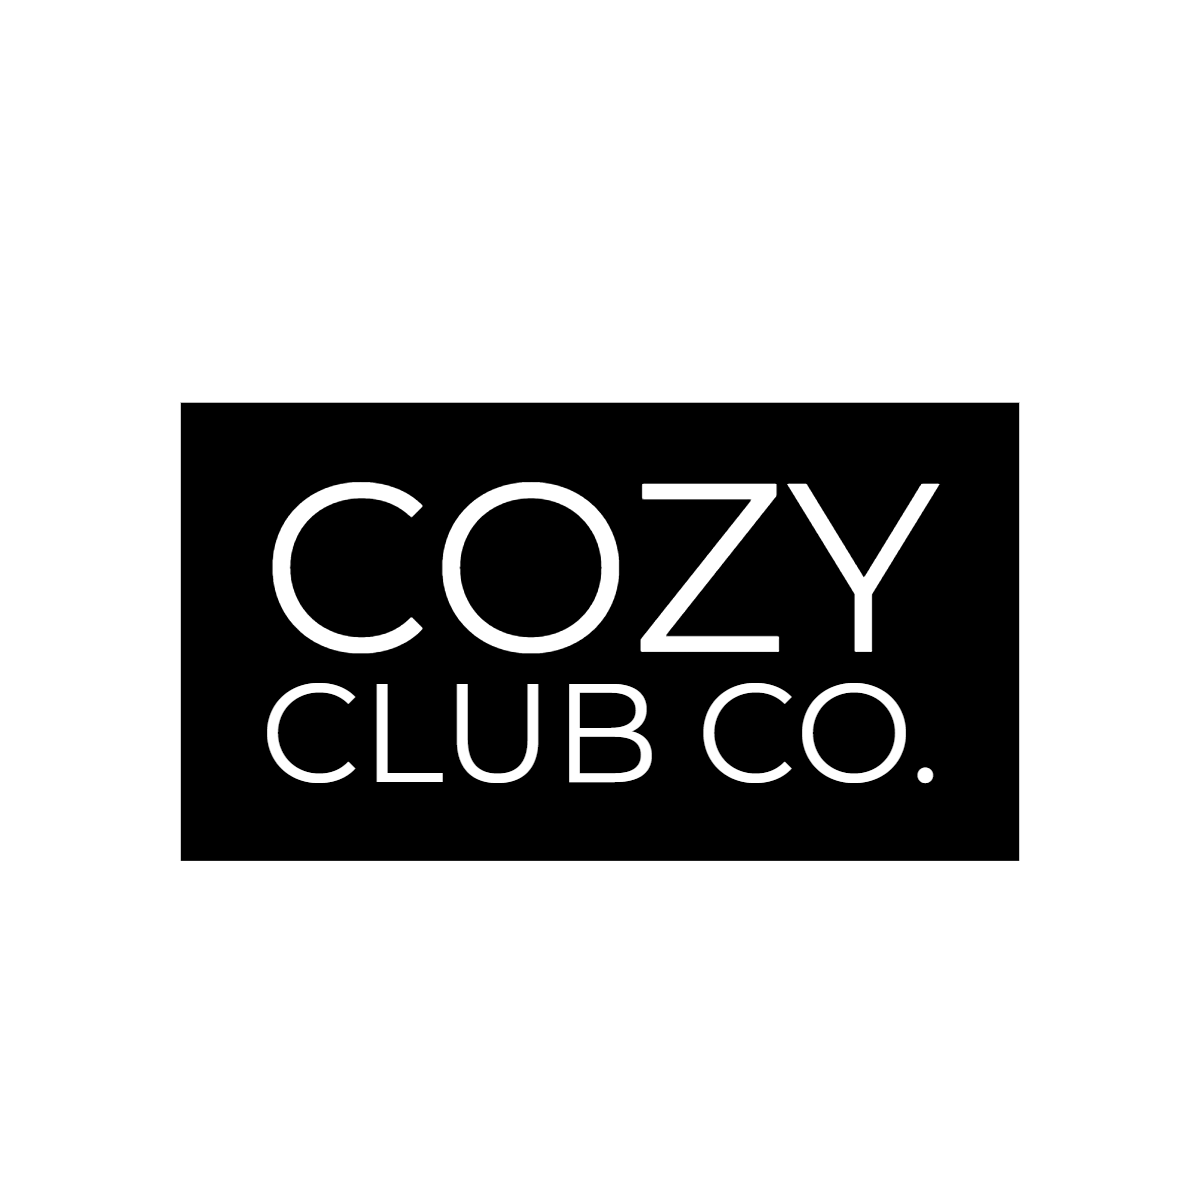 Cozy Club Co.